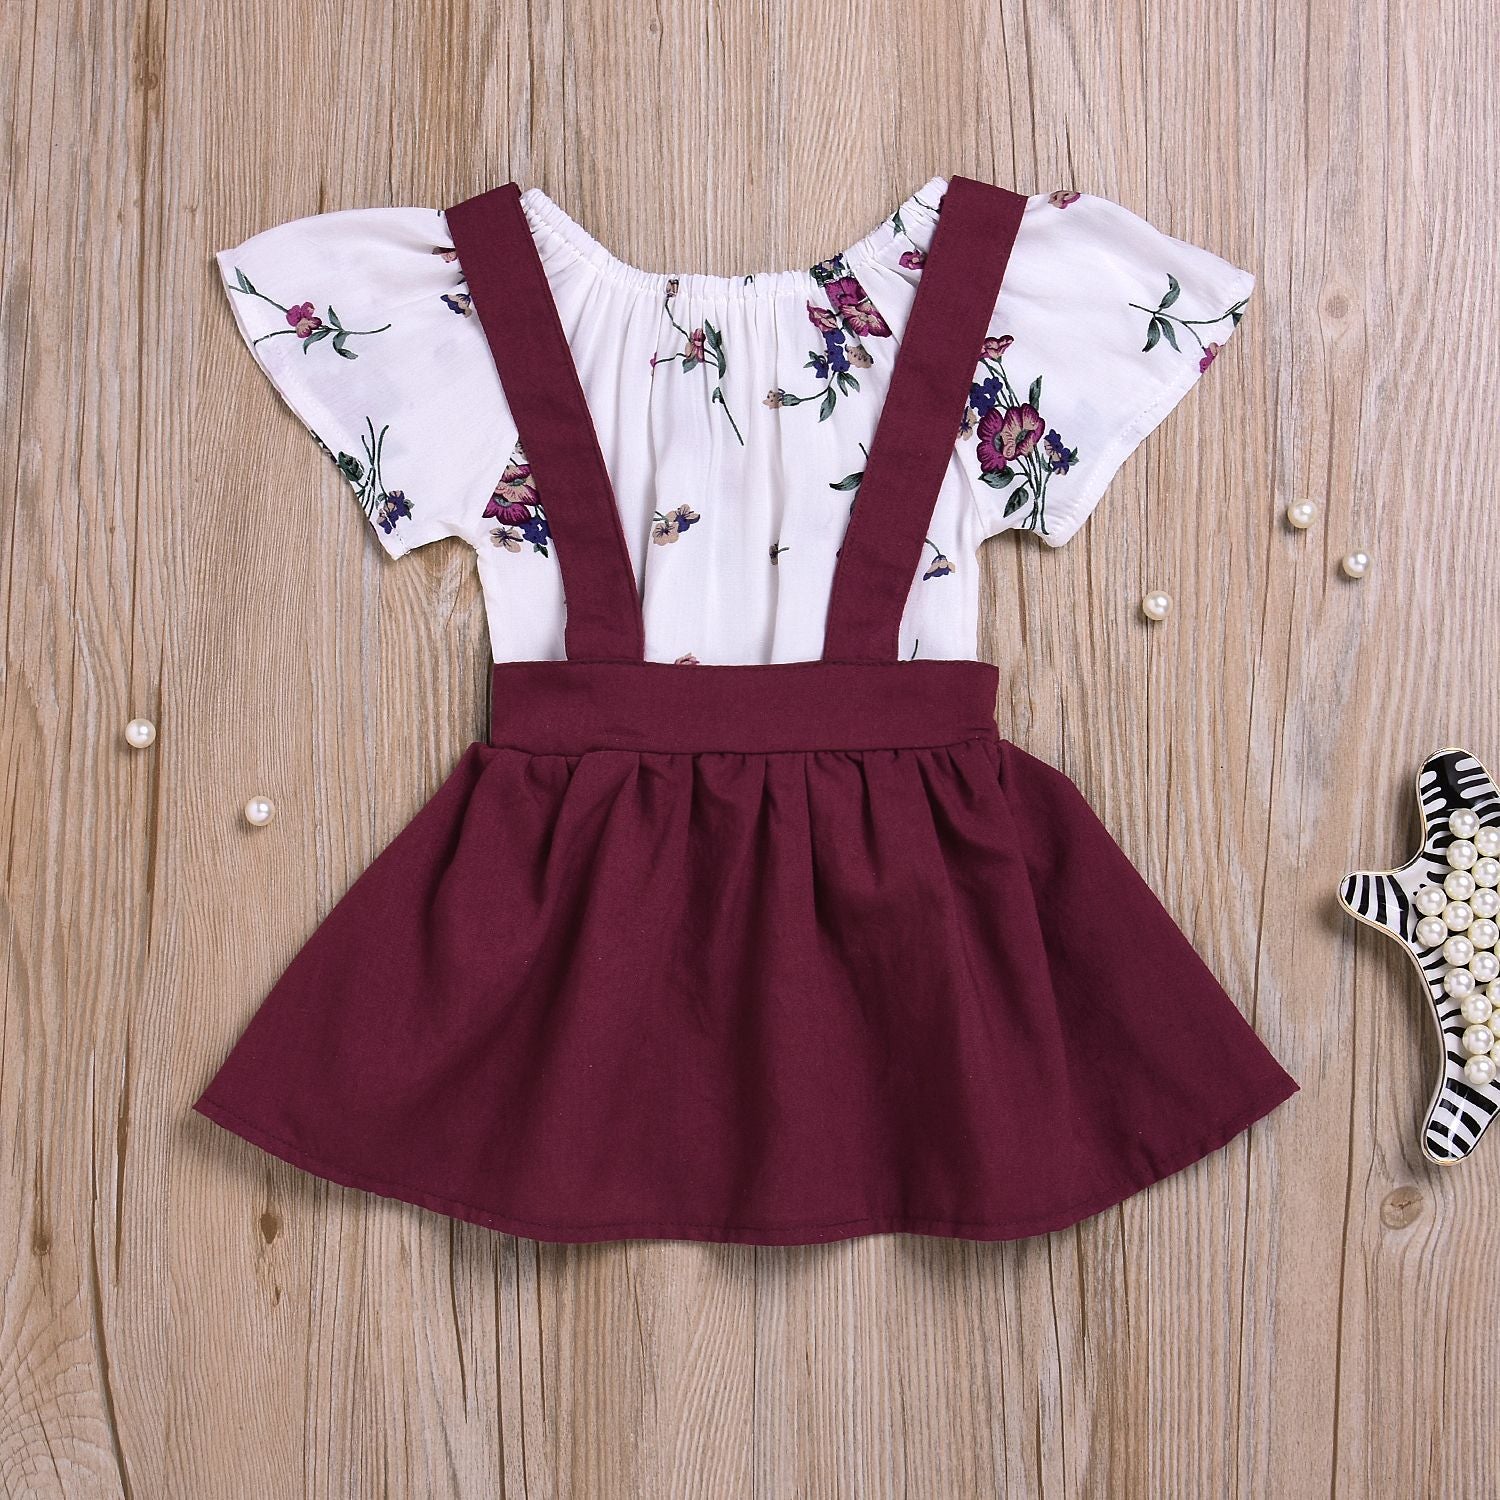 Girls Floral Romper Suspender Skirt